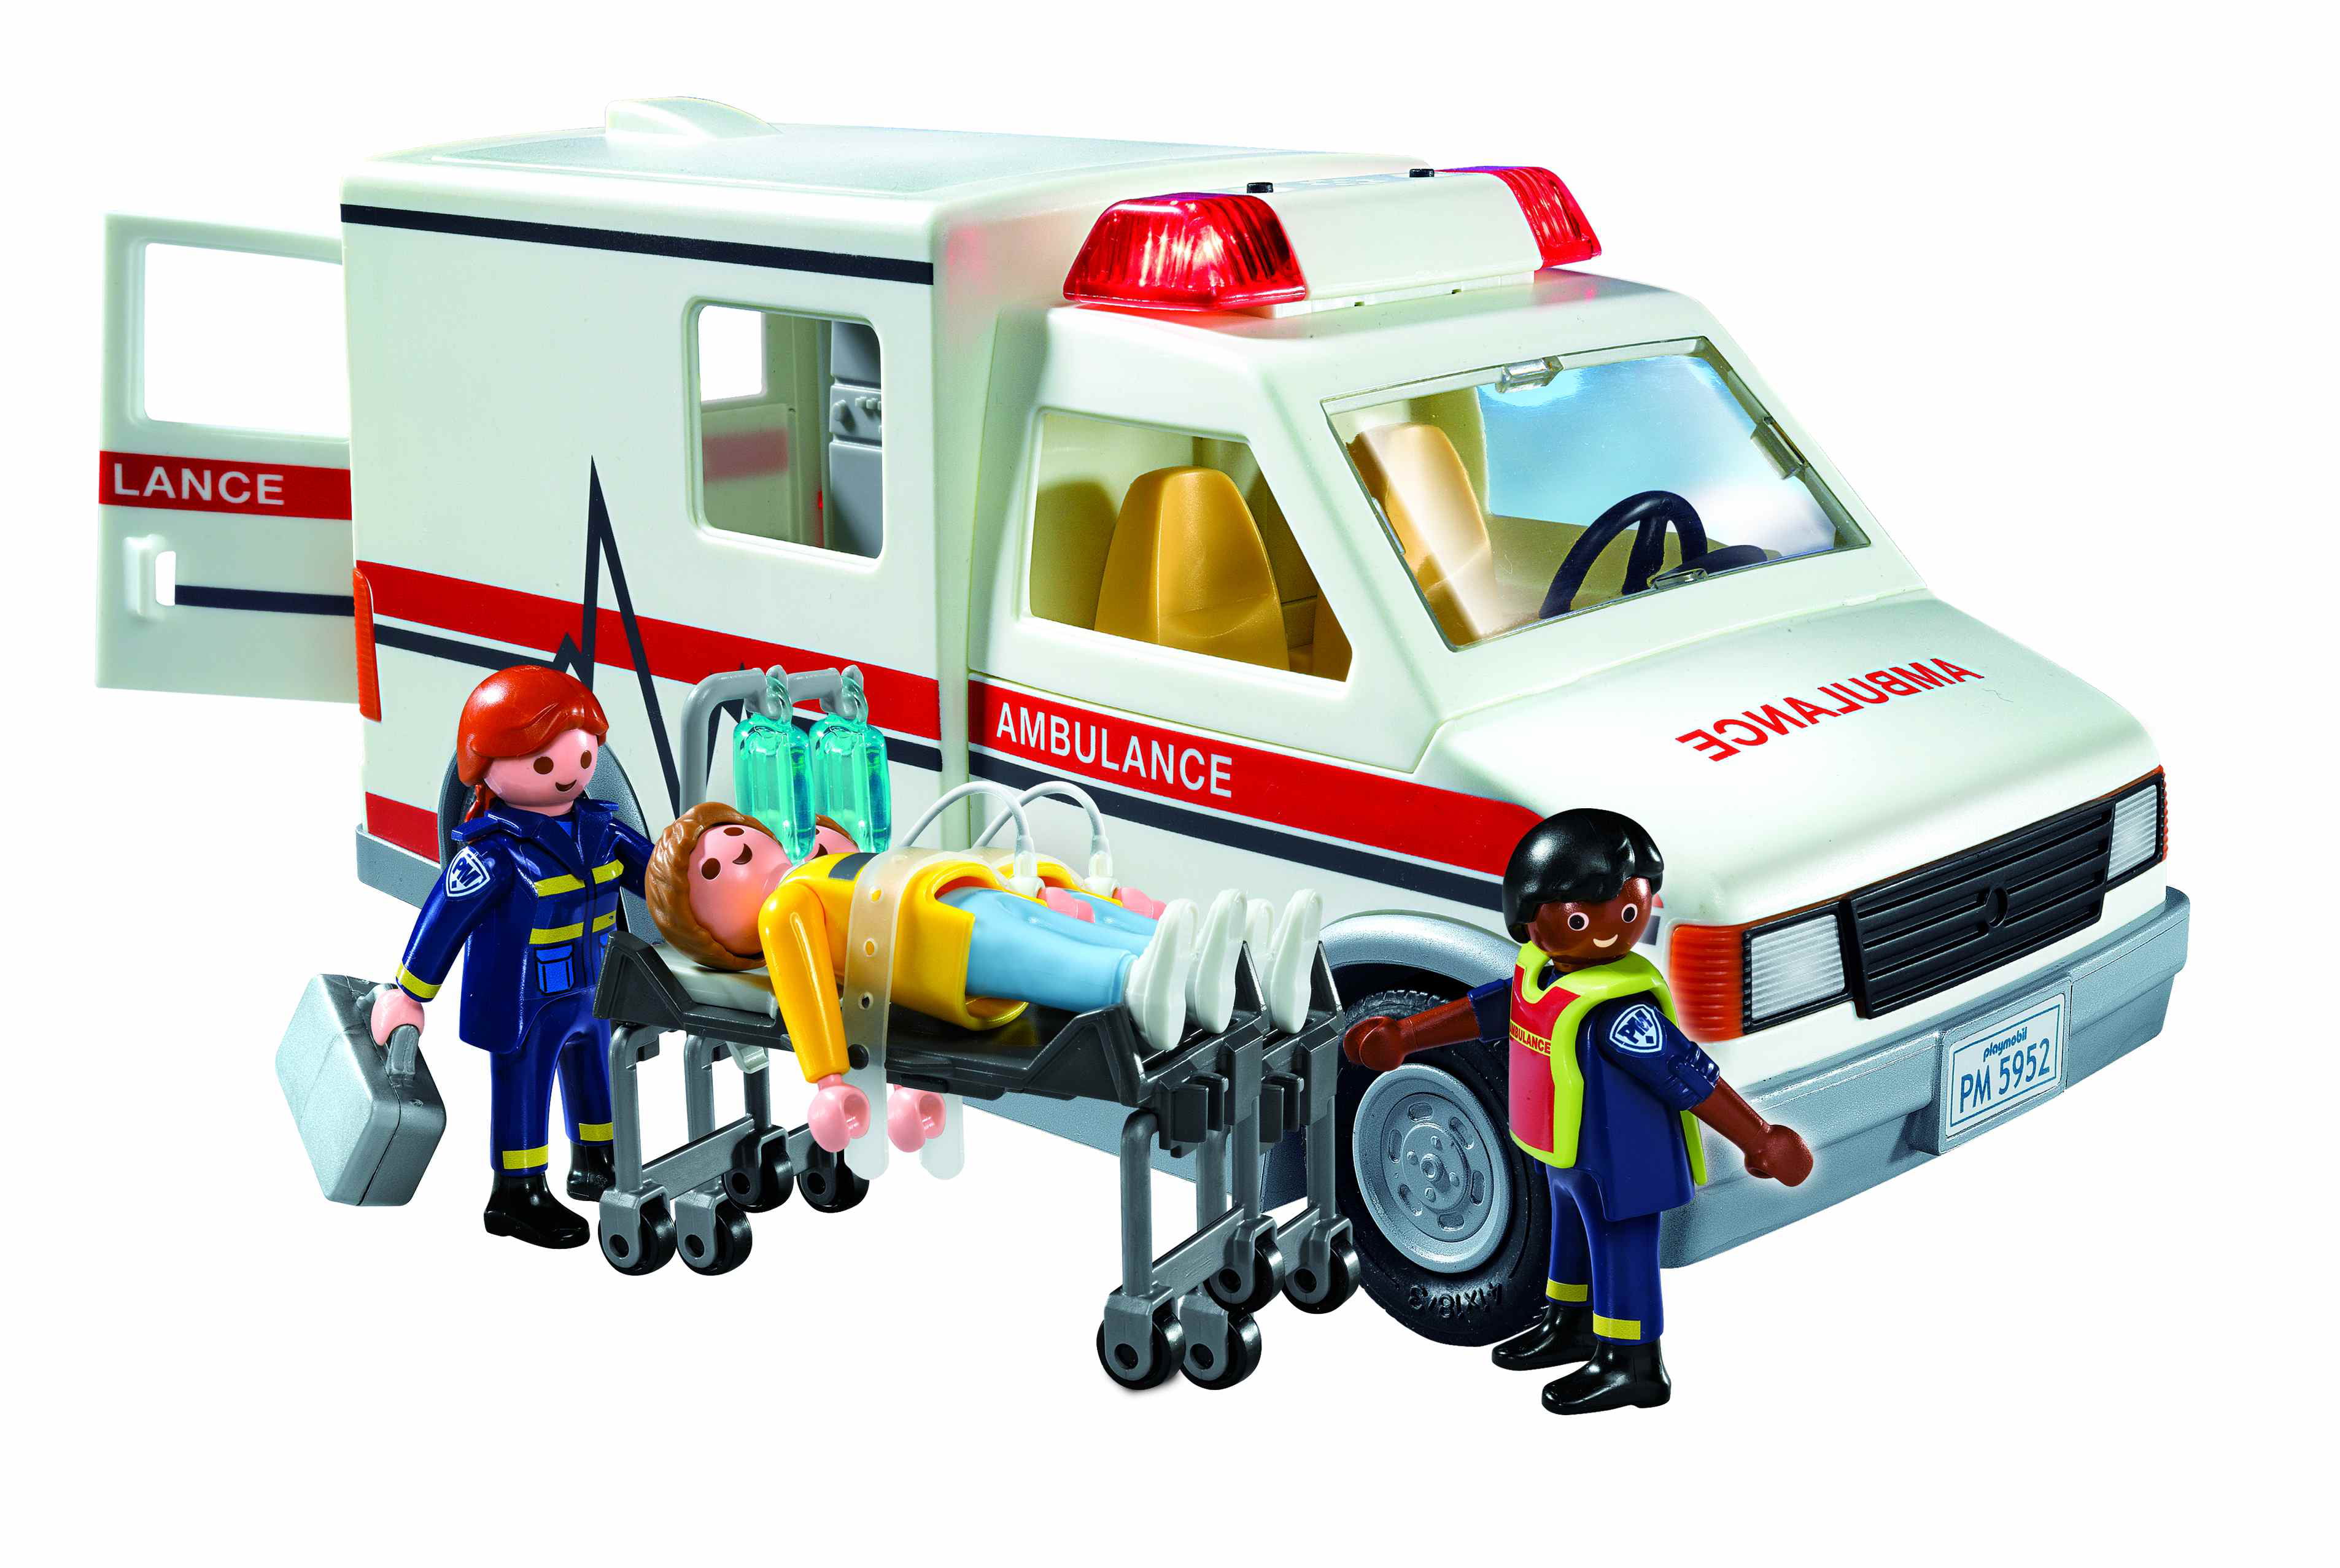 Playmobil Ambulance Playset, Playmobil